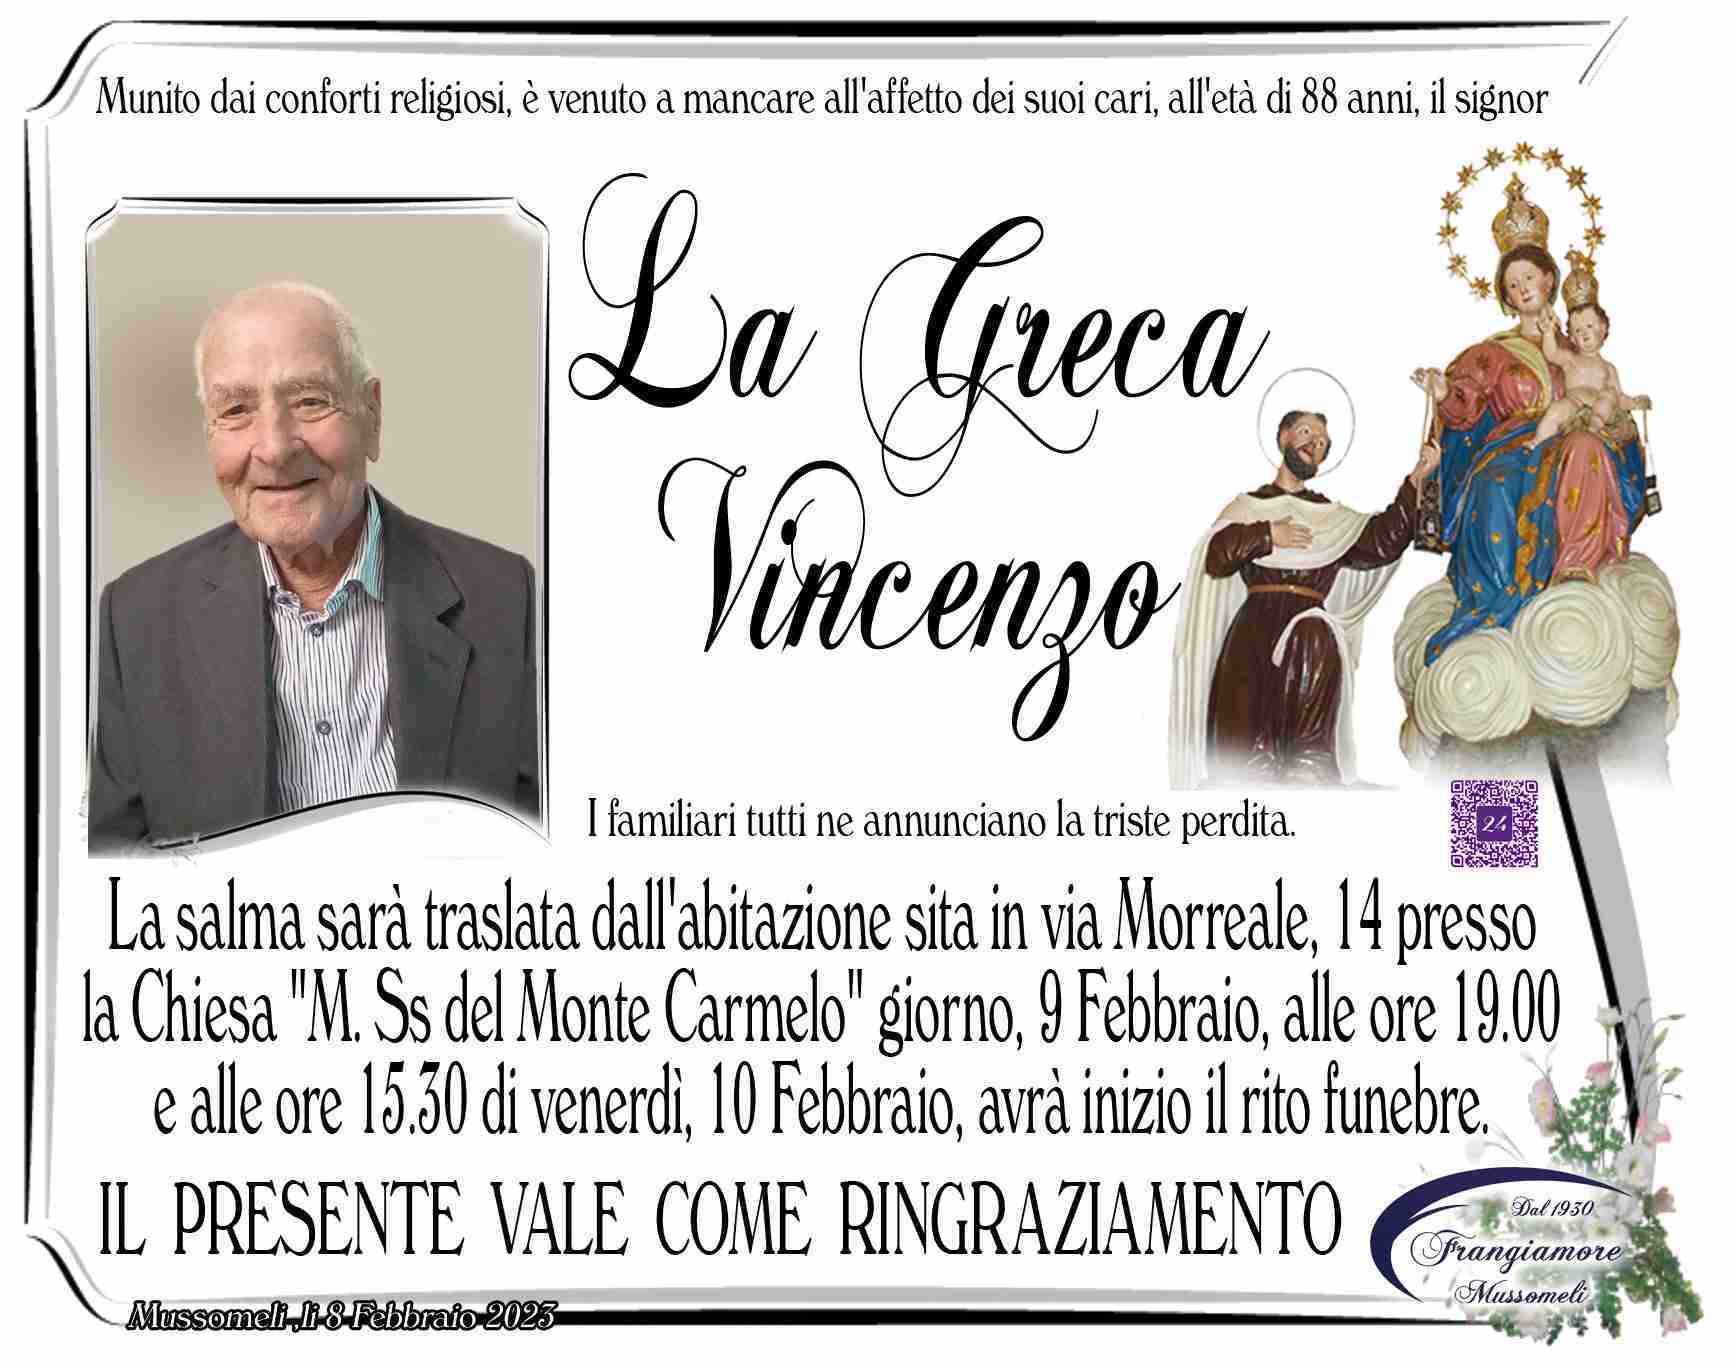 Vincenzo La Greca